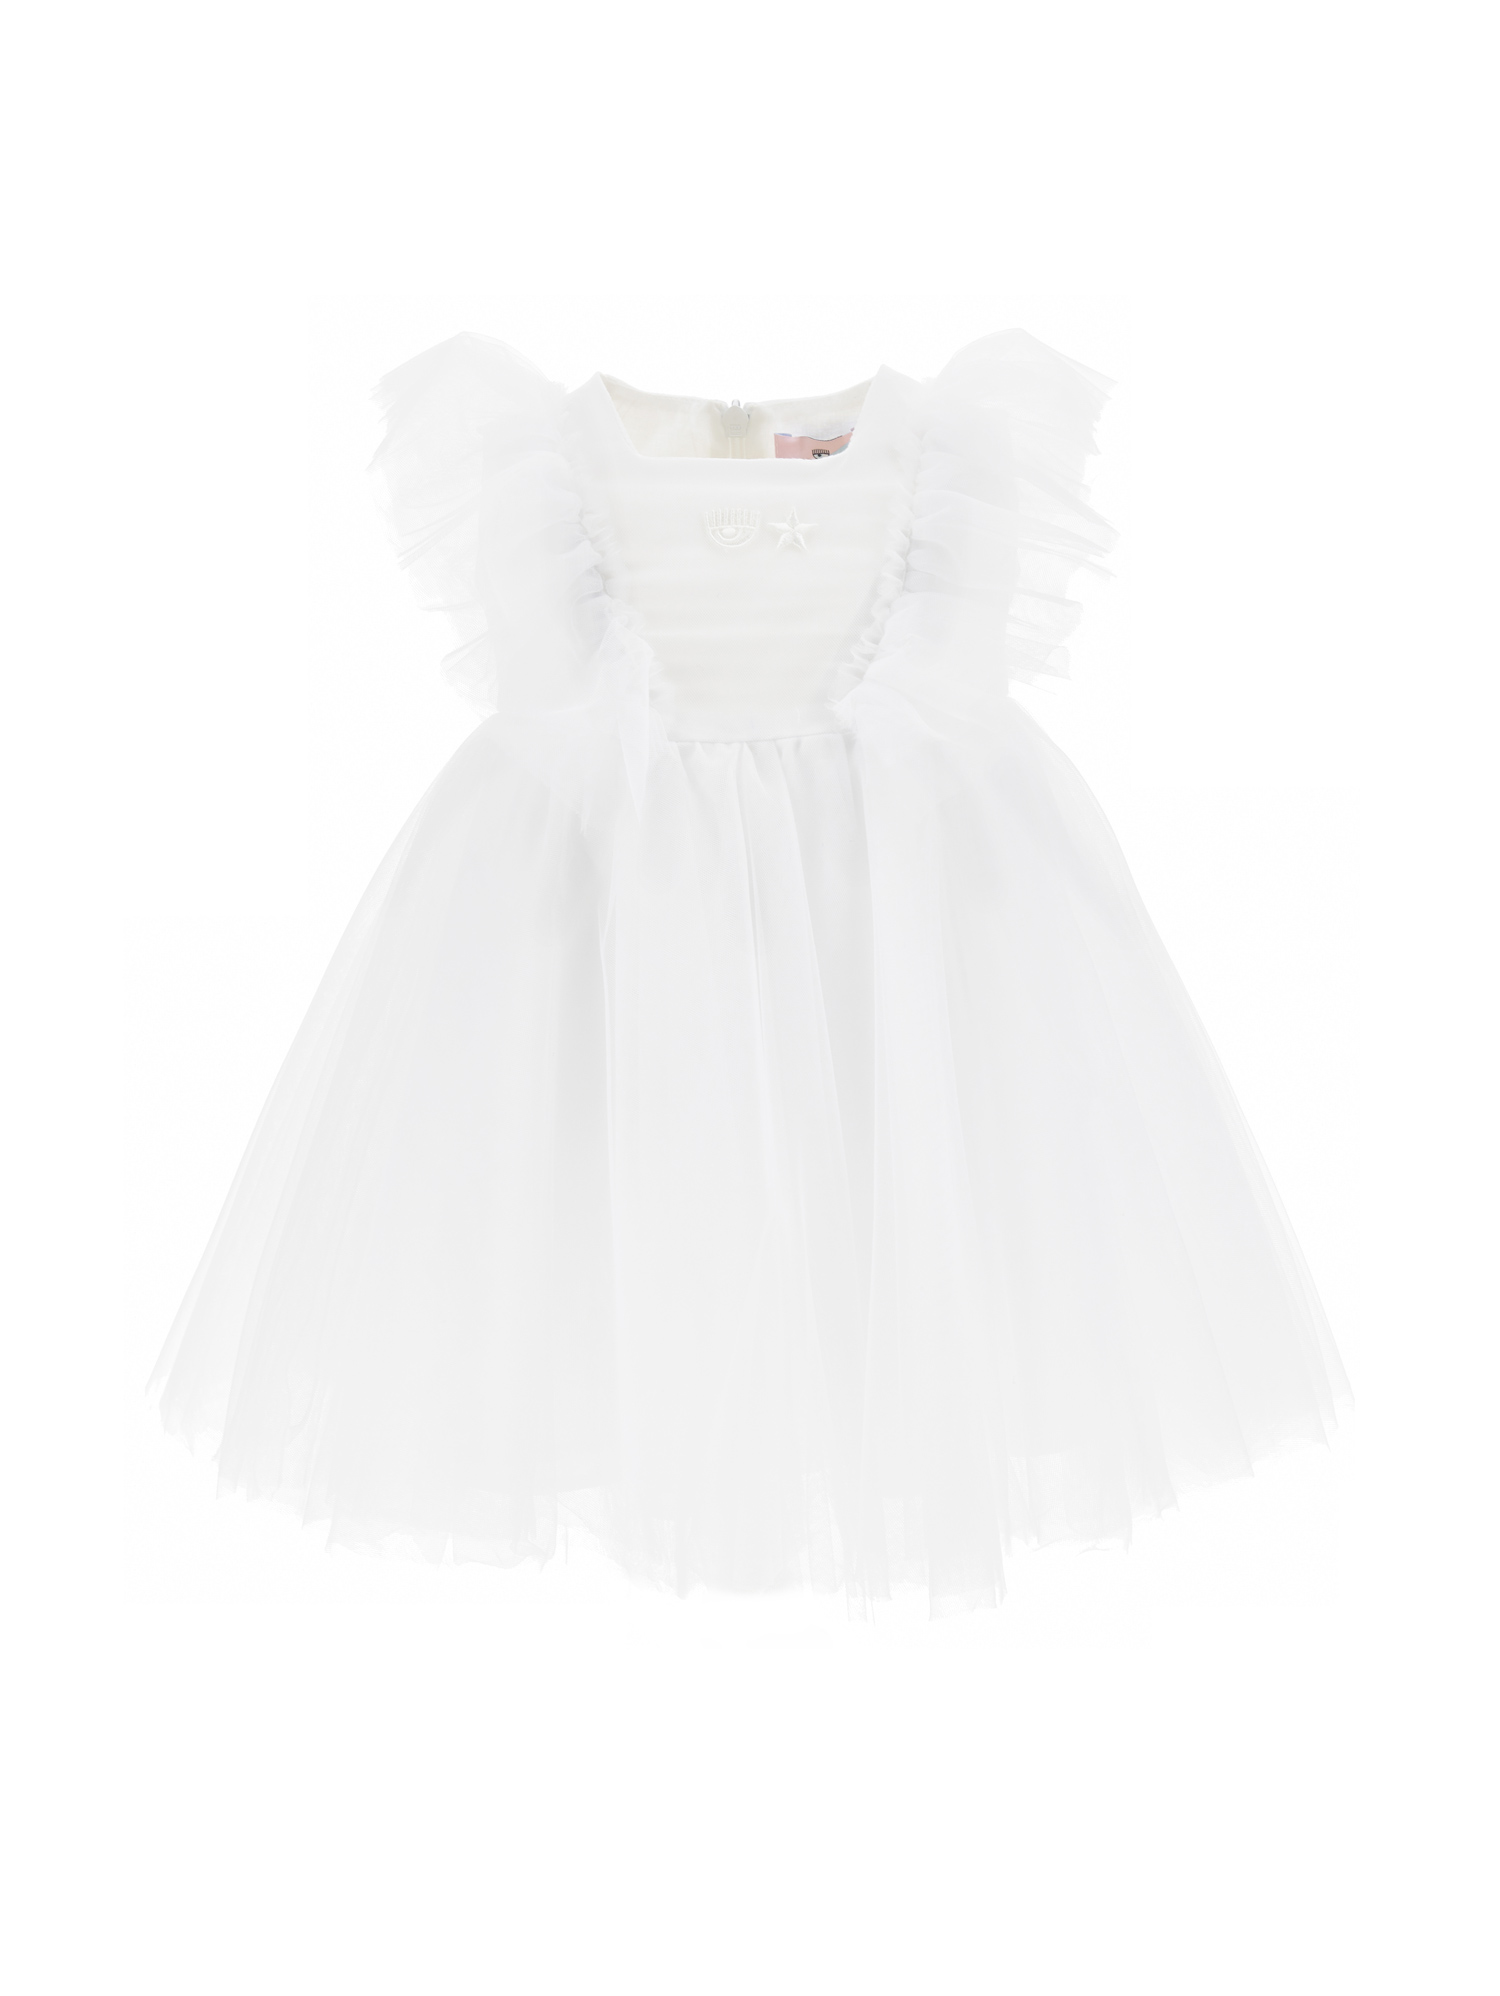 Chiara Ferragni Eyestar Embroidered Tulle Party Dress In White